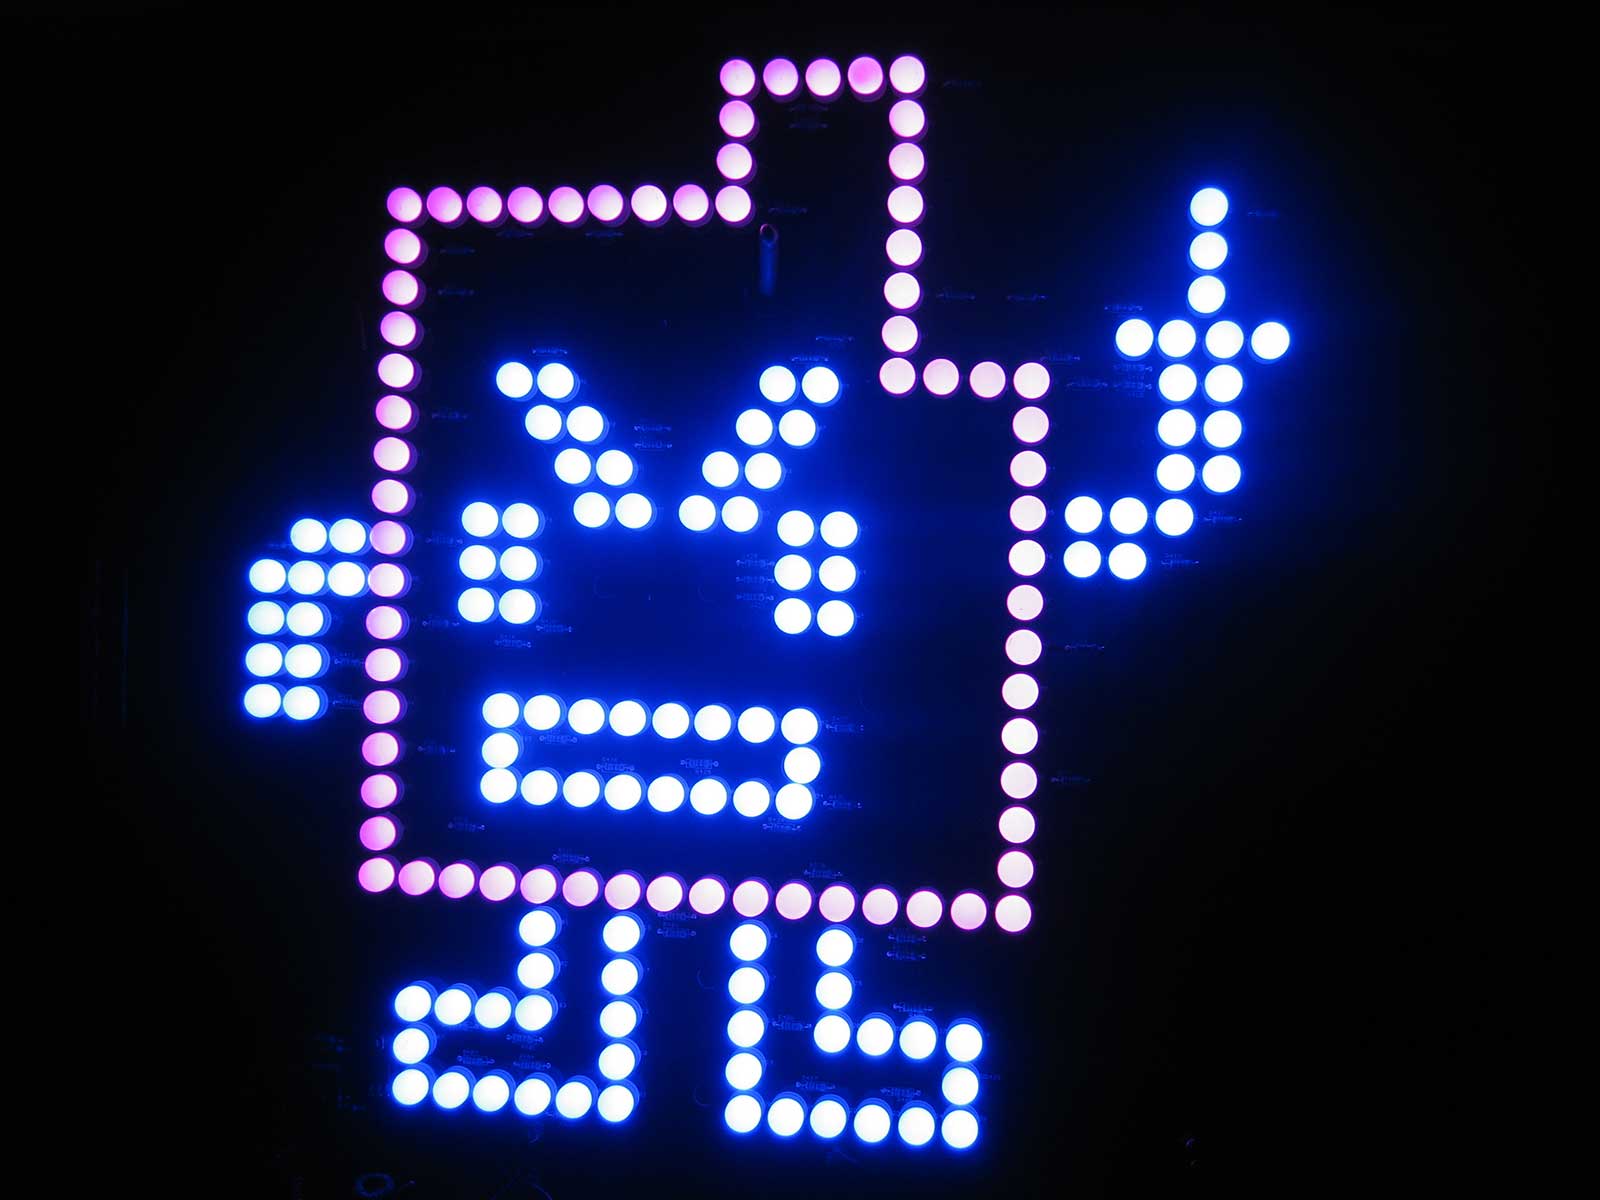 Blue and Pink “Err” Mooninite (Aqua Teen Hunger Force) LED sign